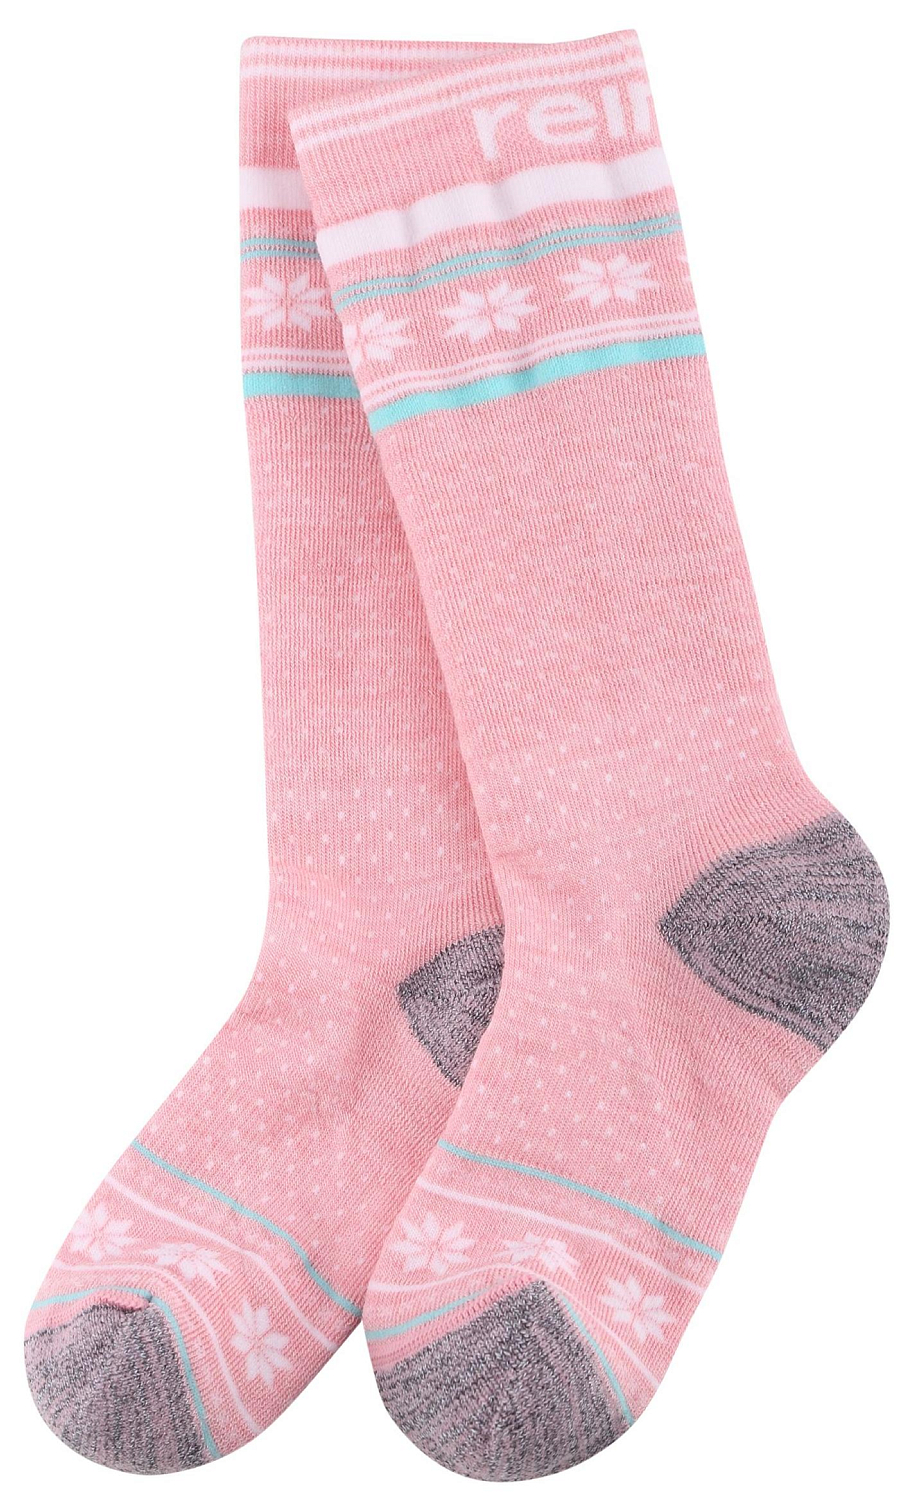 Носки Reima 2020-21 SkiDay Bubblegum pink